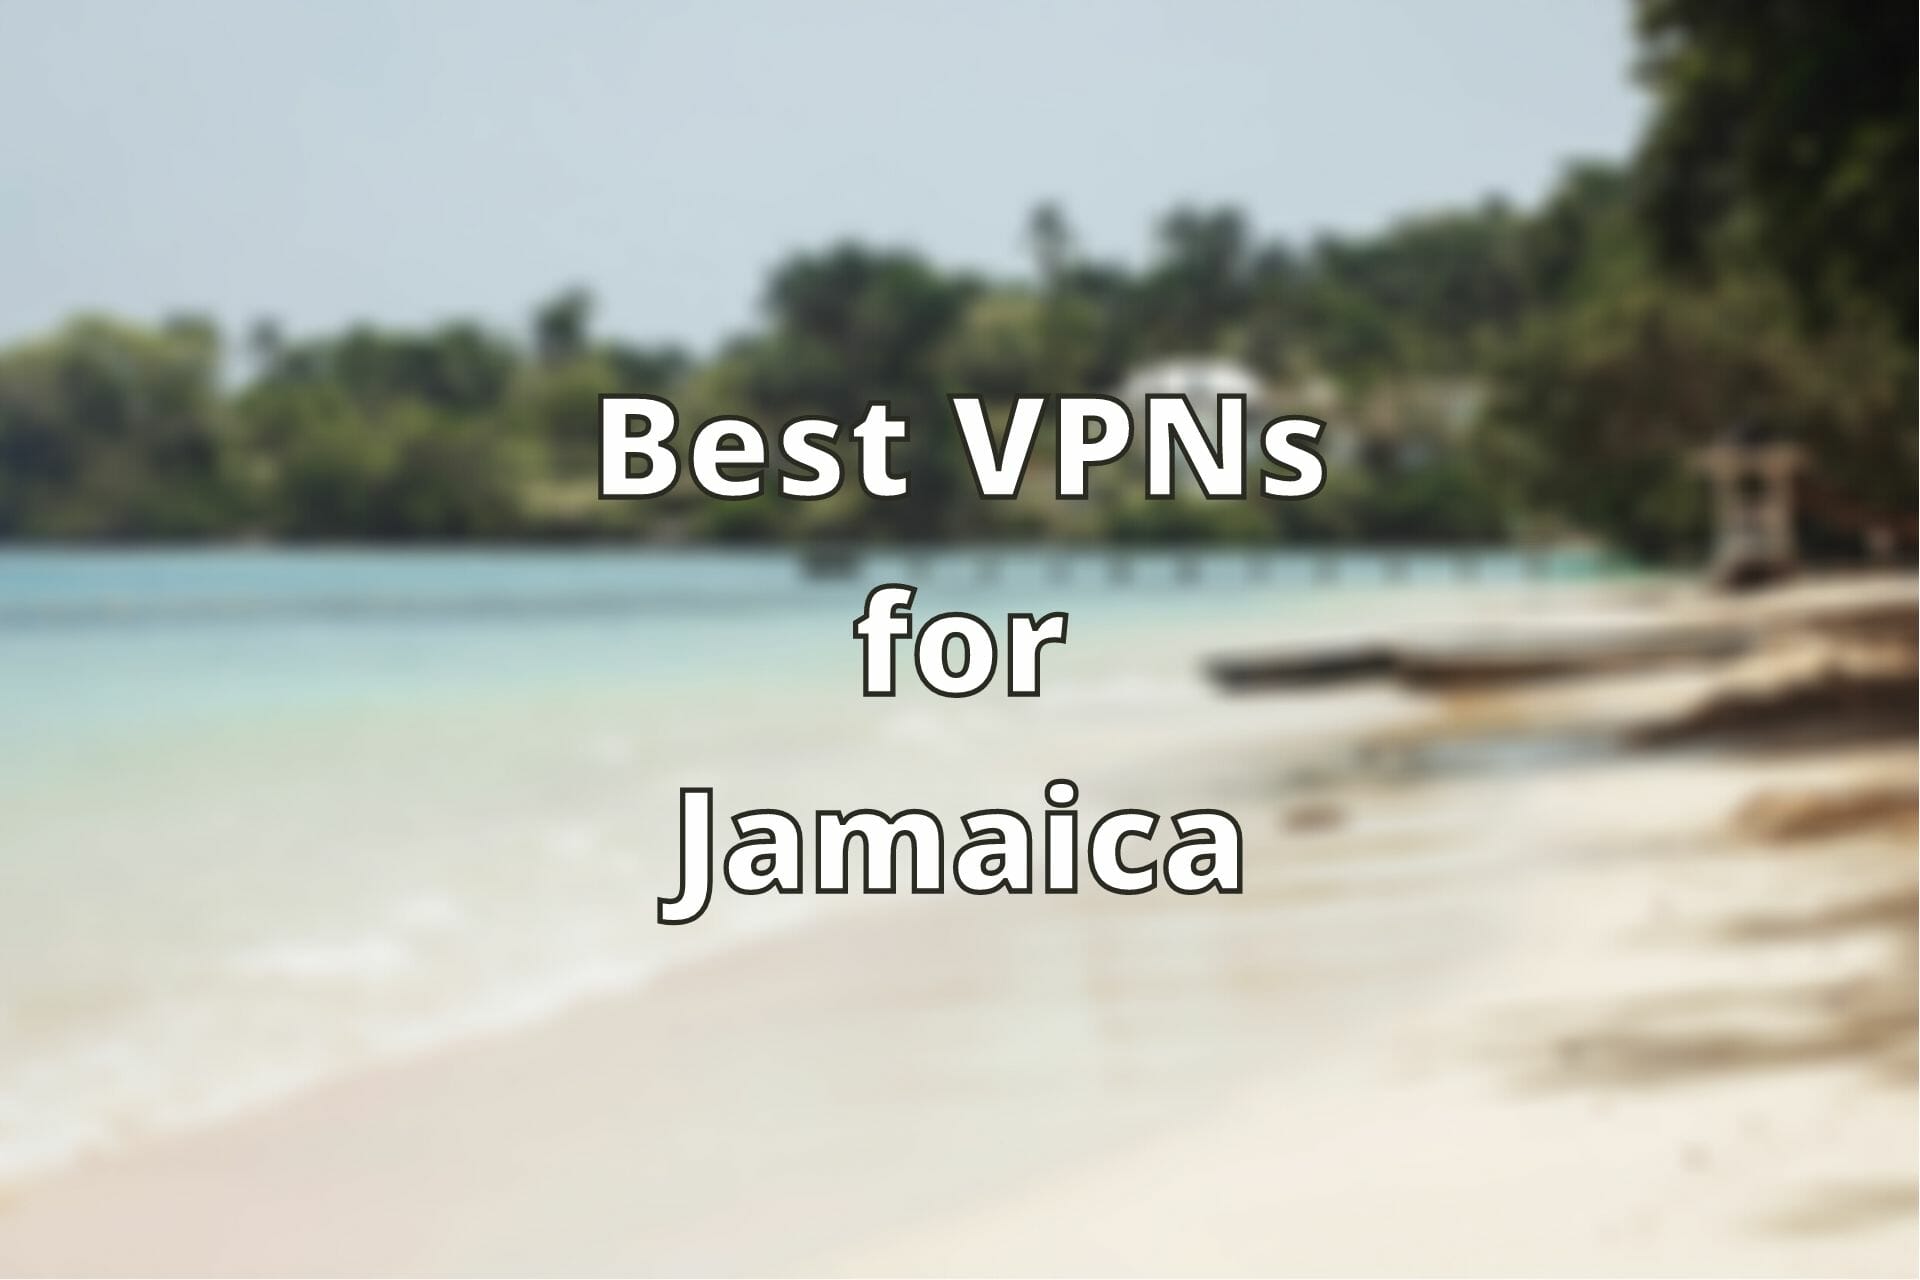 Best VPNs for Jamaica